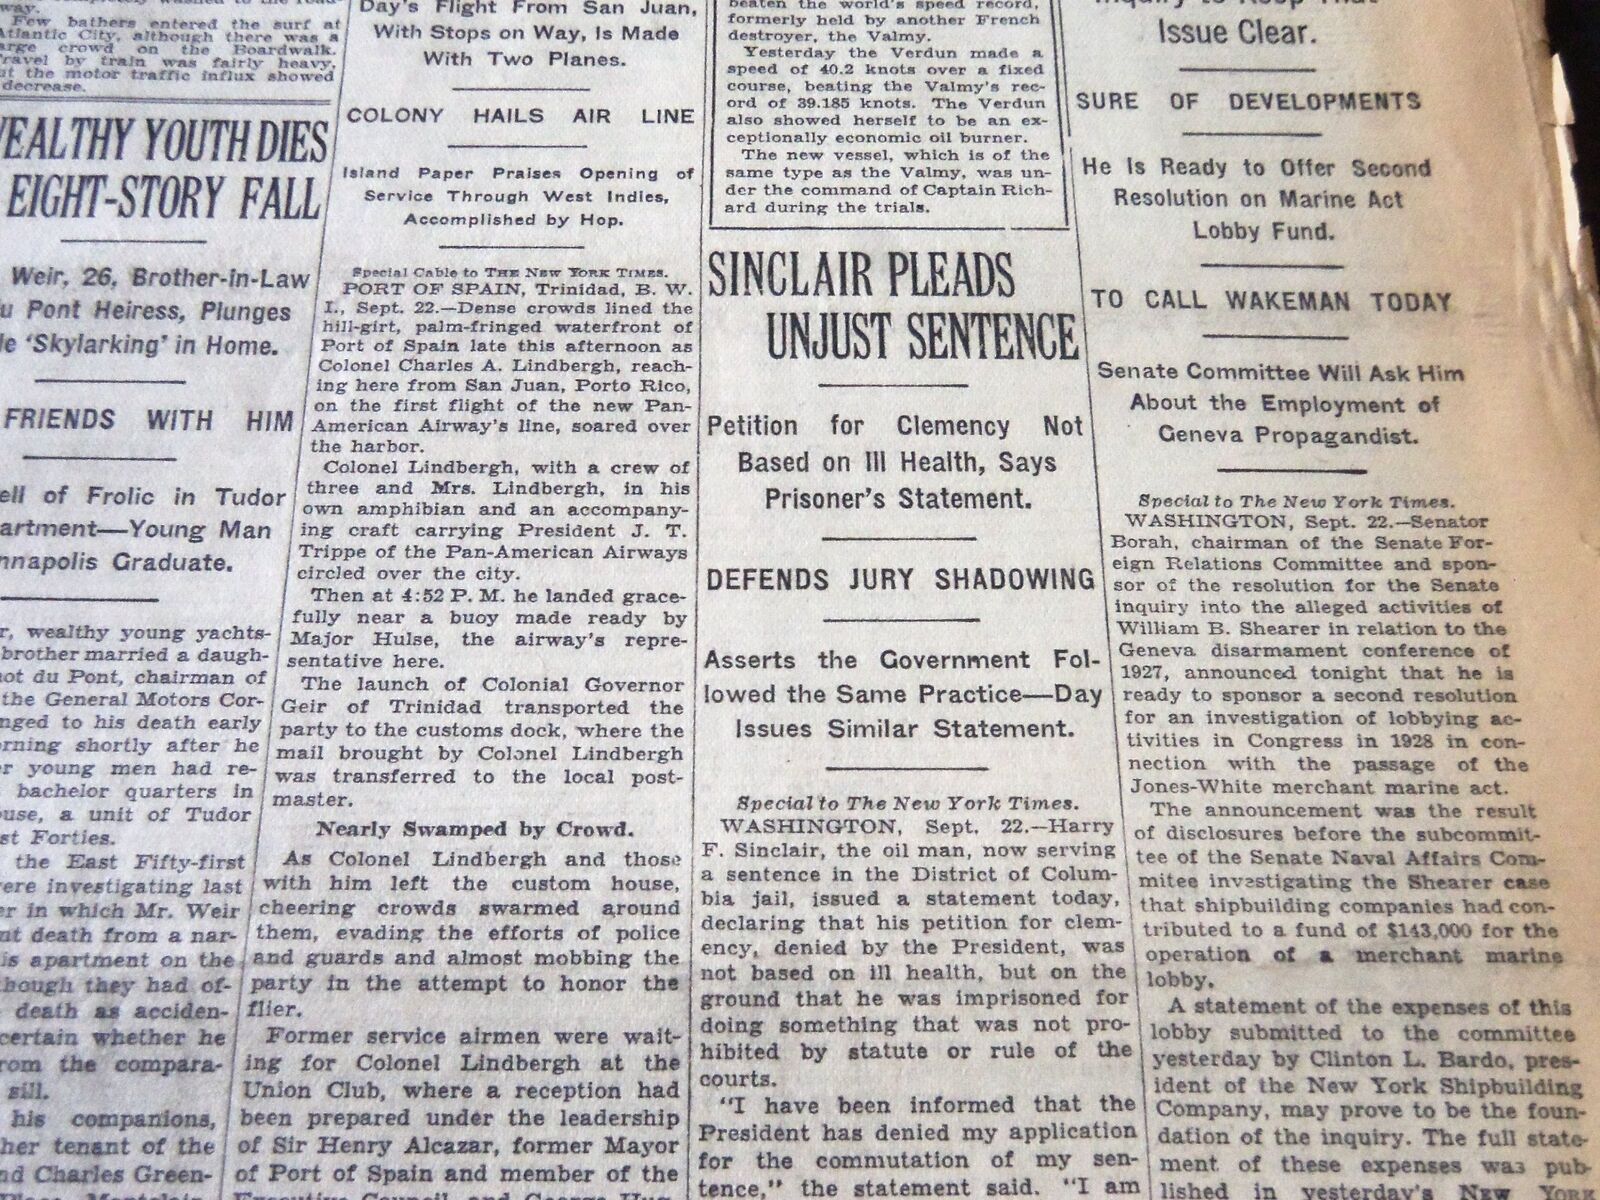 1929 SEPTEMBER 23 NEW YORK TIMES - SINCLAIR PLEADS UNJUST SENTENCE - NT 6553